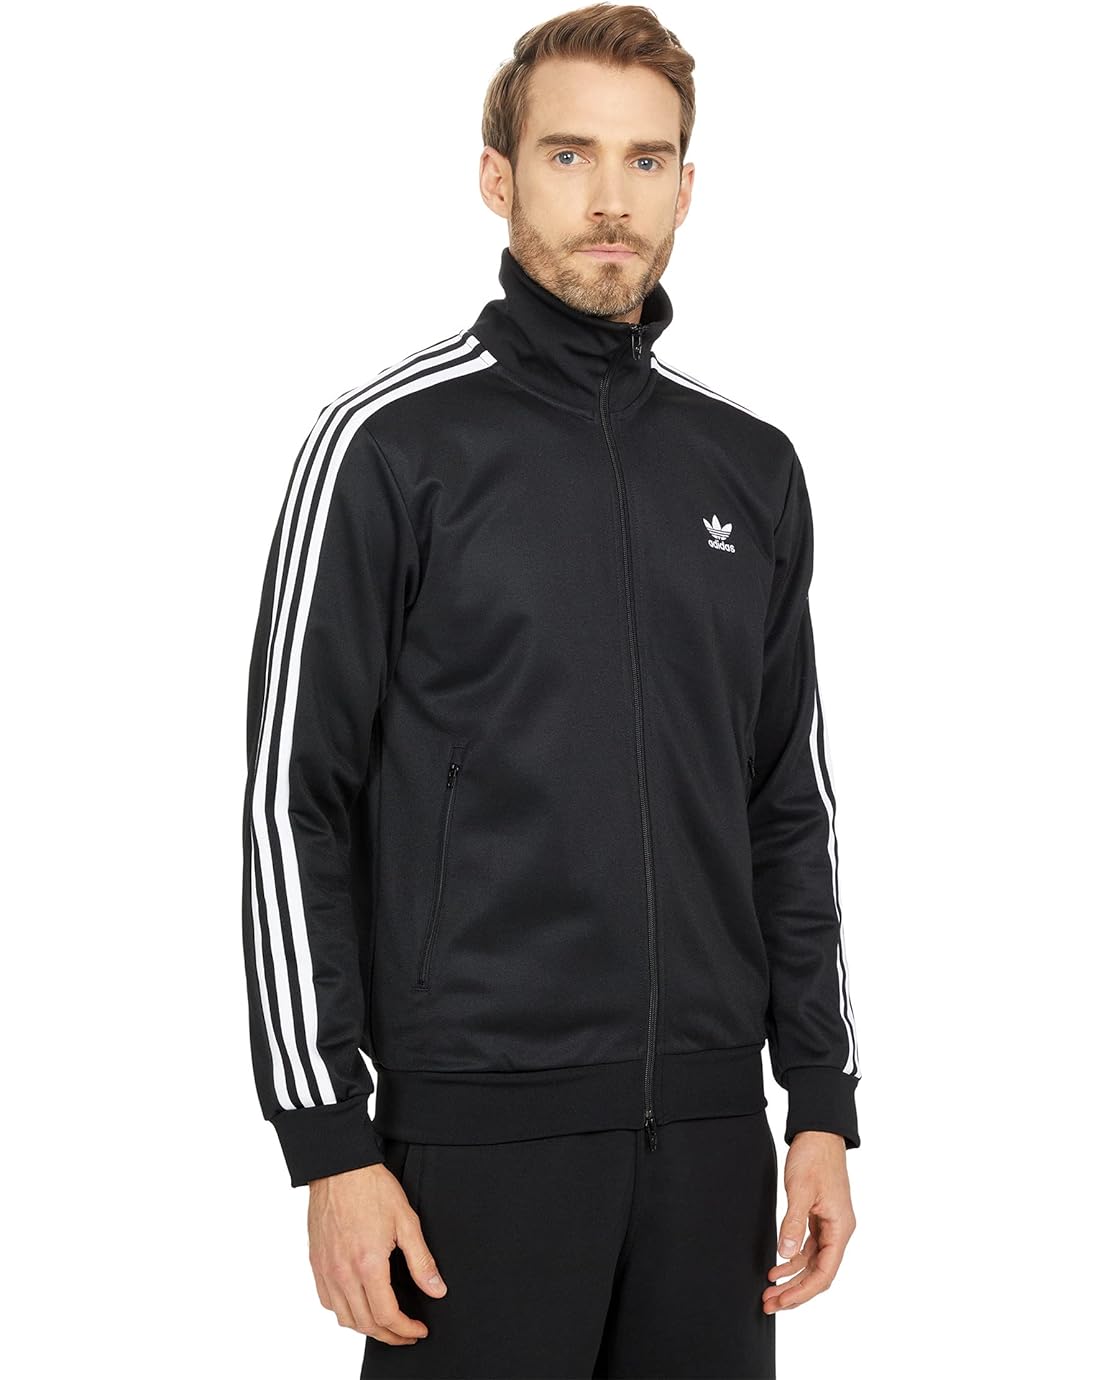 Adidas Originals Beckenbauer Track Jacket